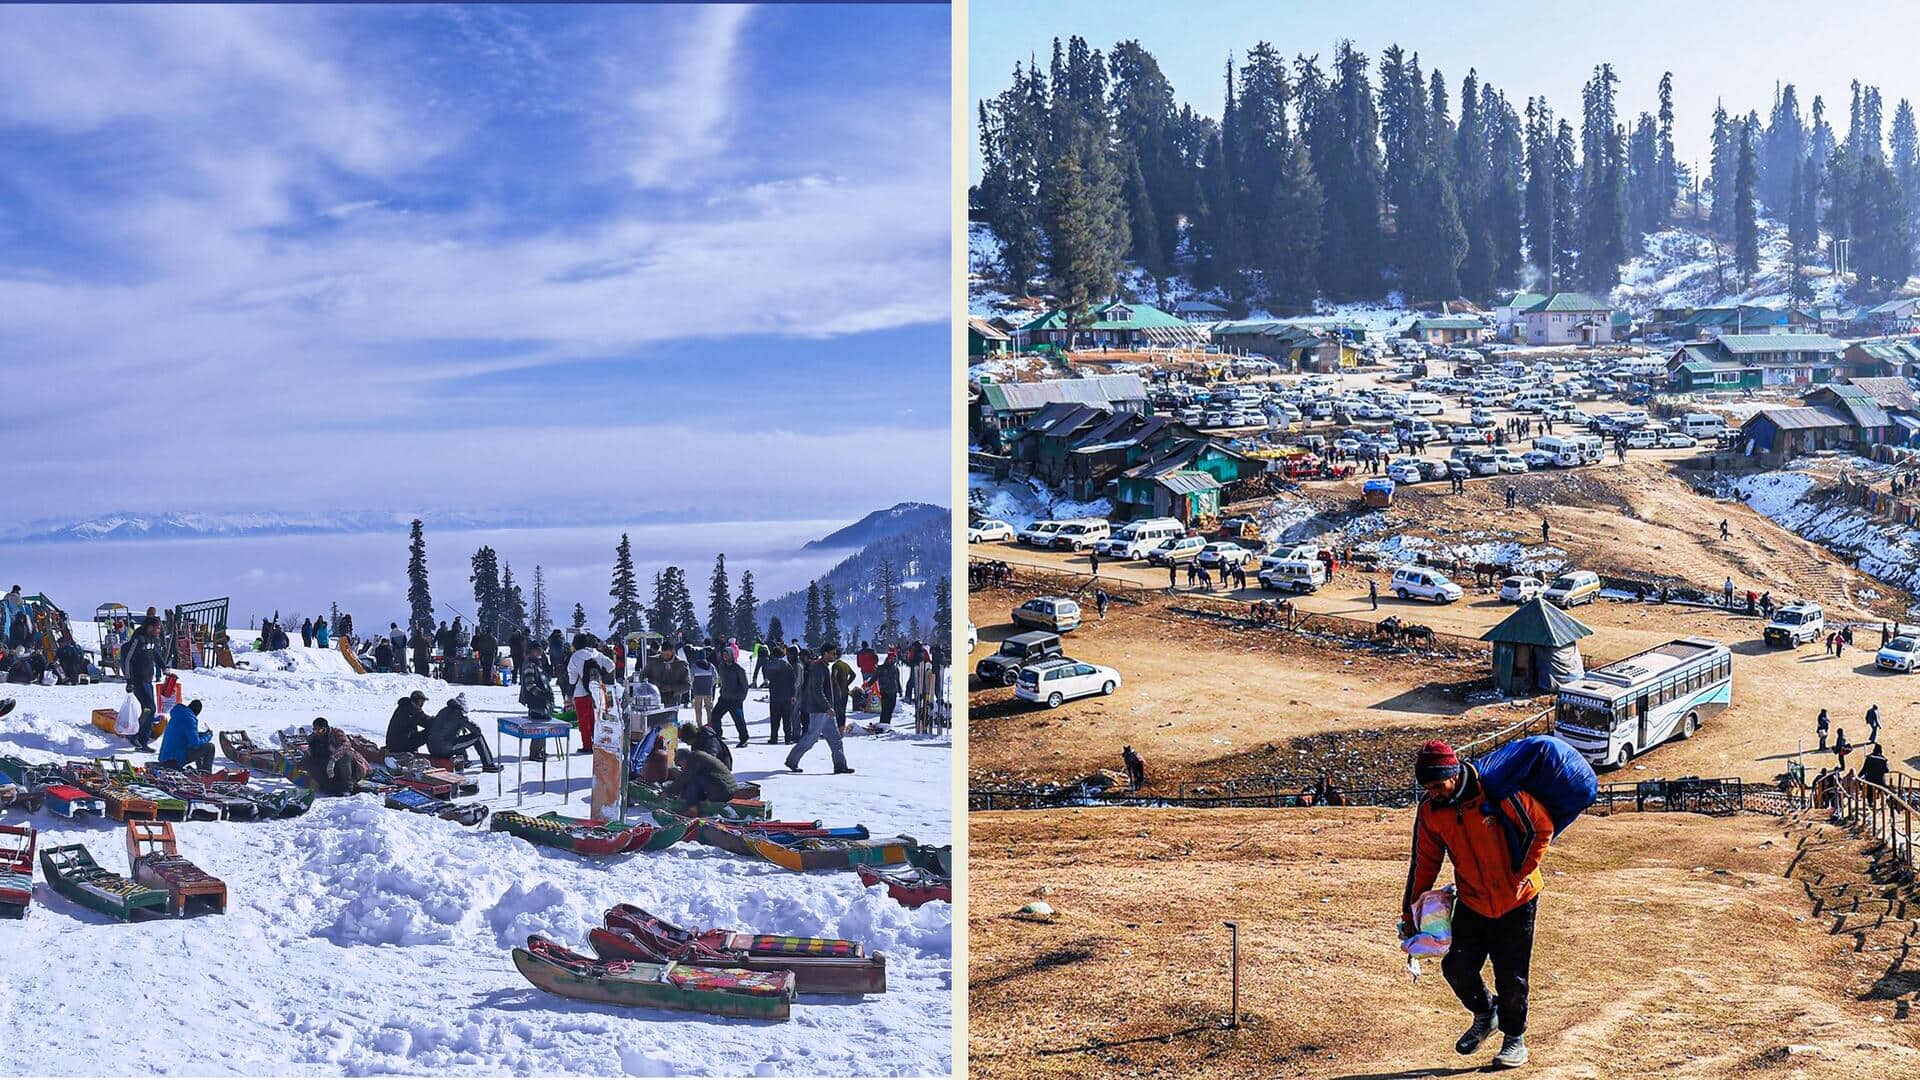 Kashmir's snowless winter raises environmental, livelihood concerns